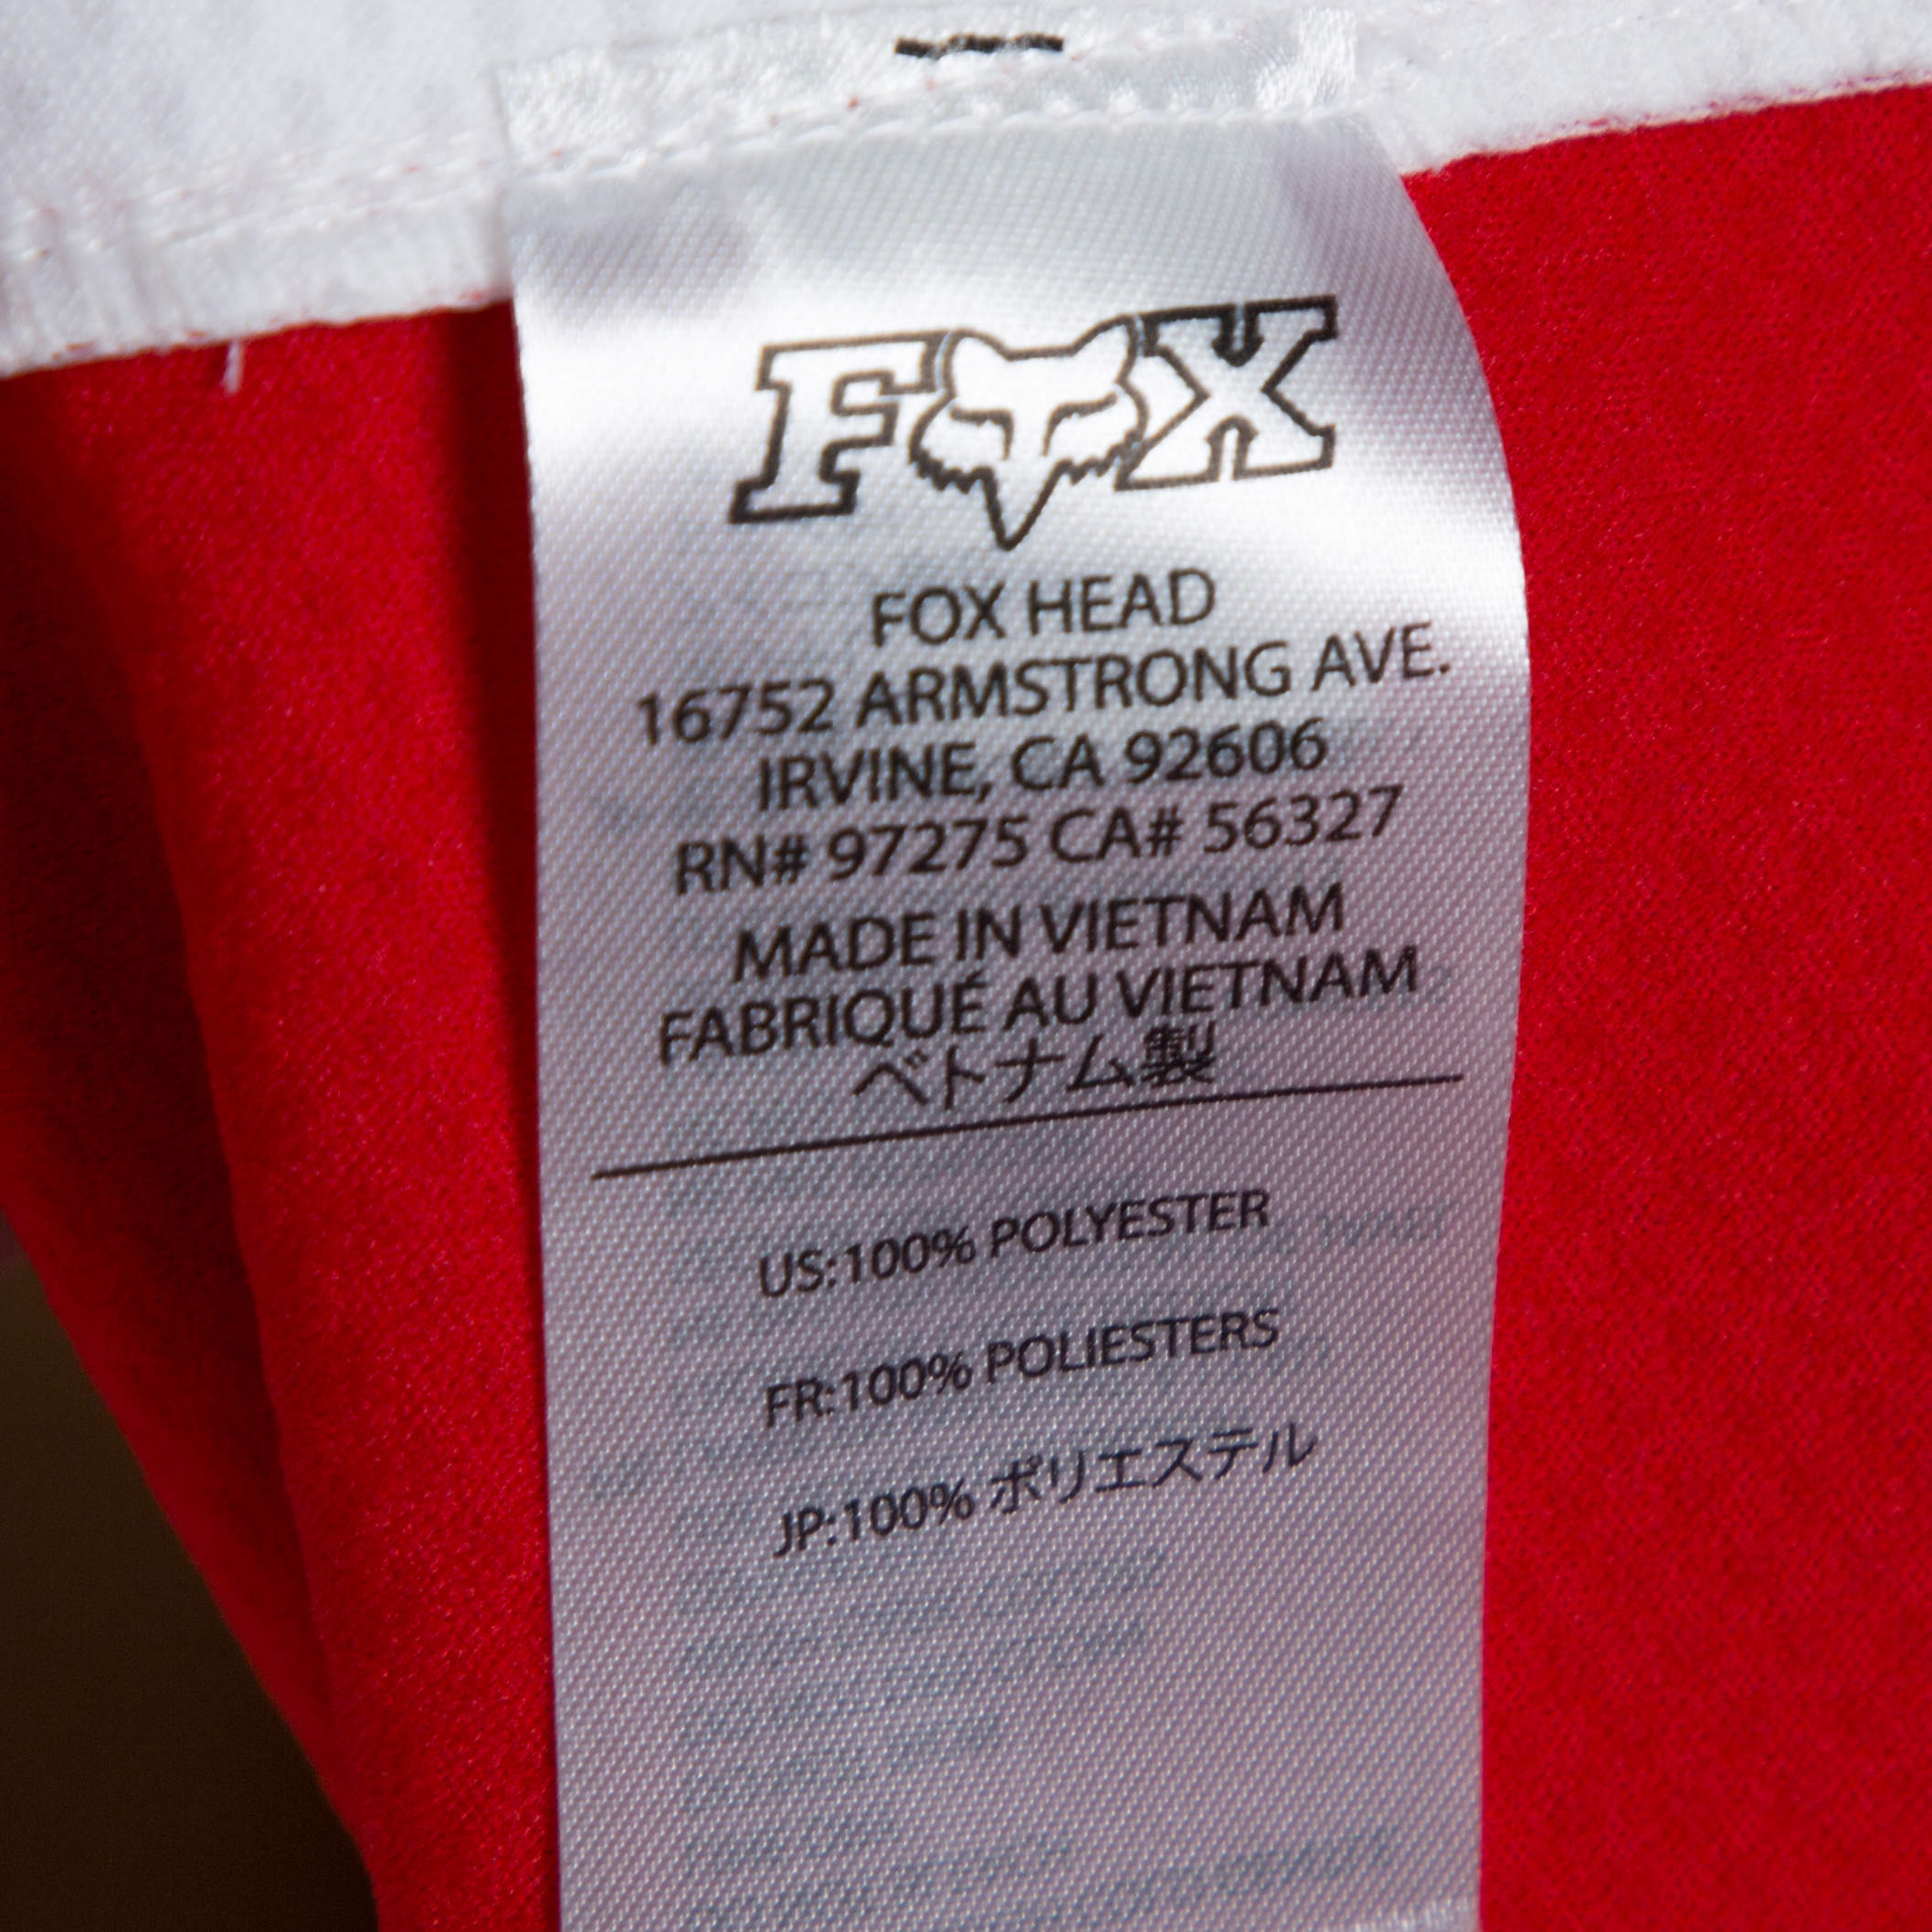 Supreme X Fox Red & White Racing Moto Jersey T-Shirt L Supreme